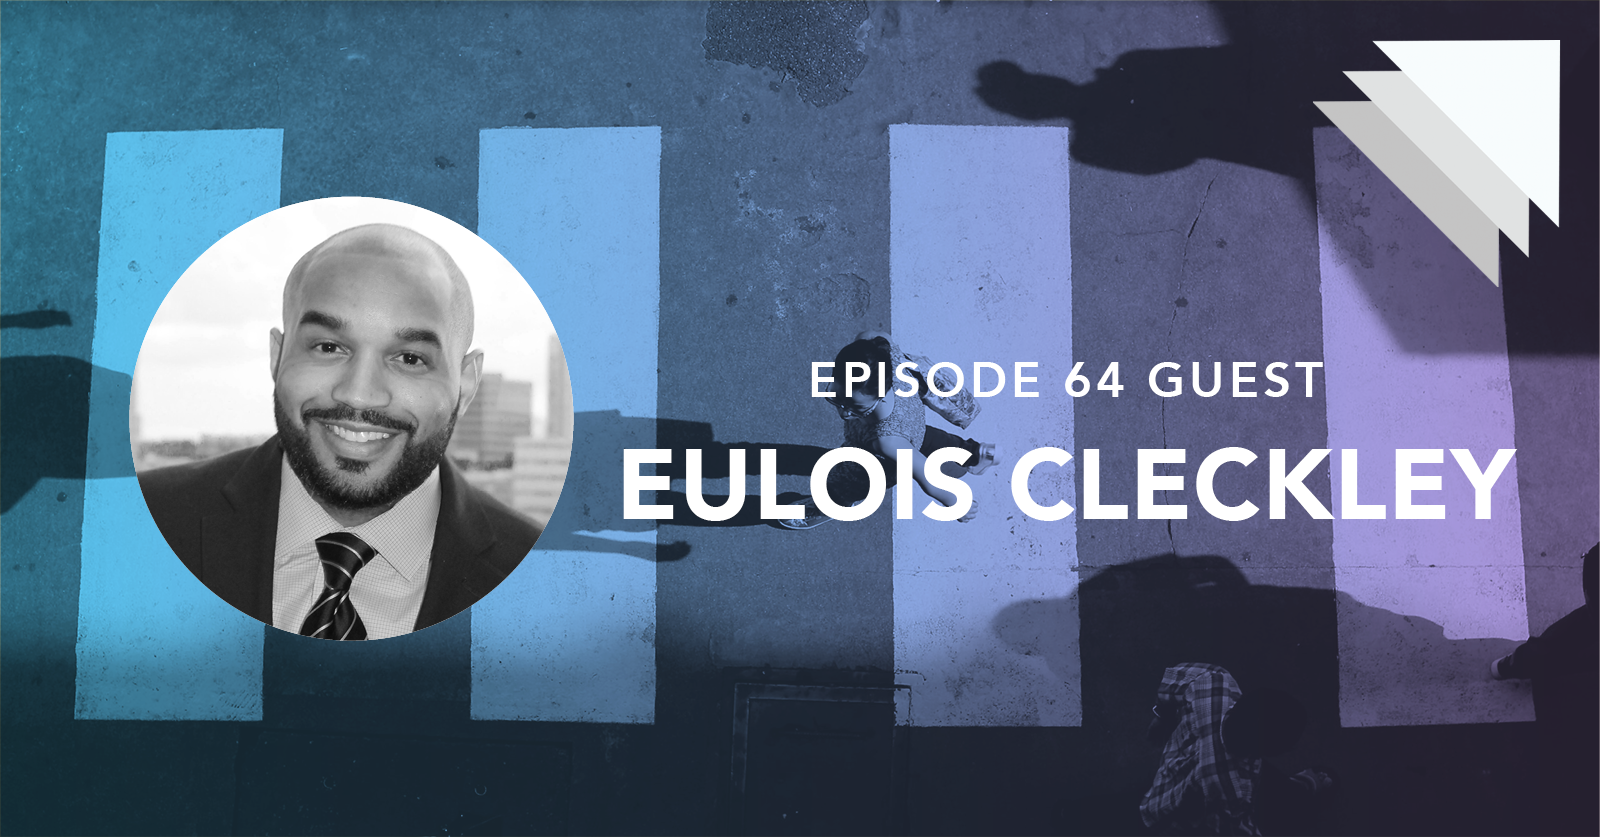 Episode 64 guest Eulois Cleckley